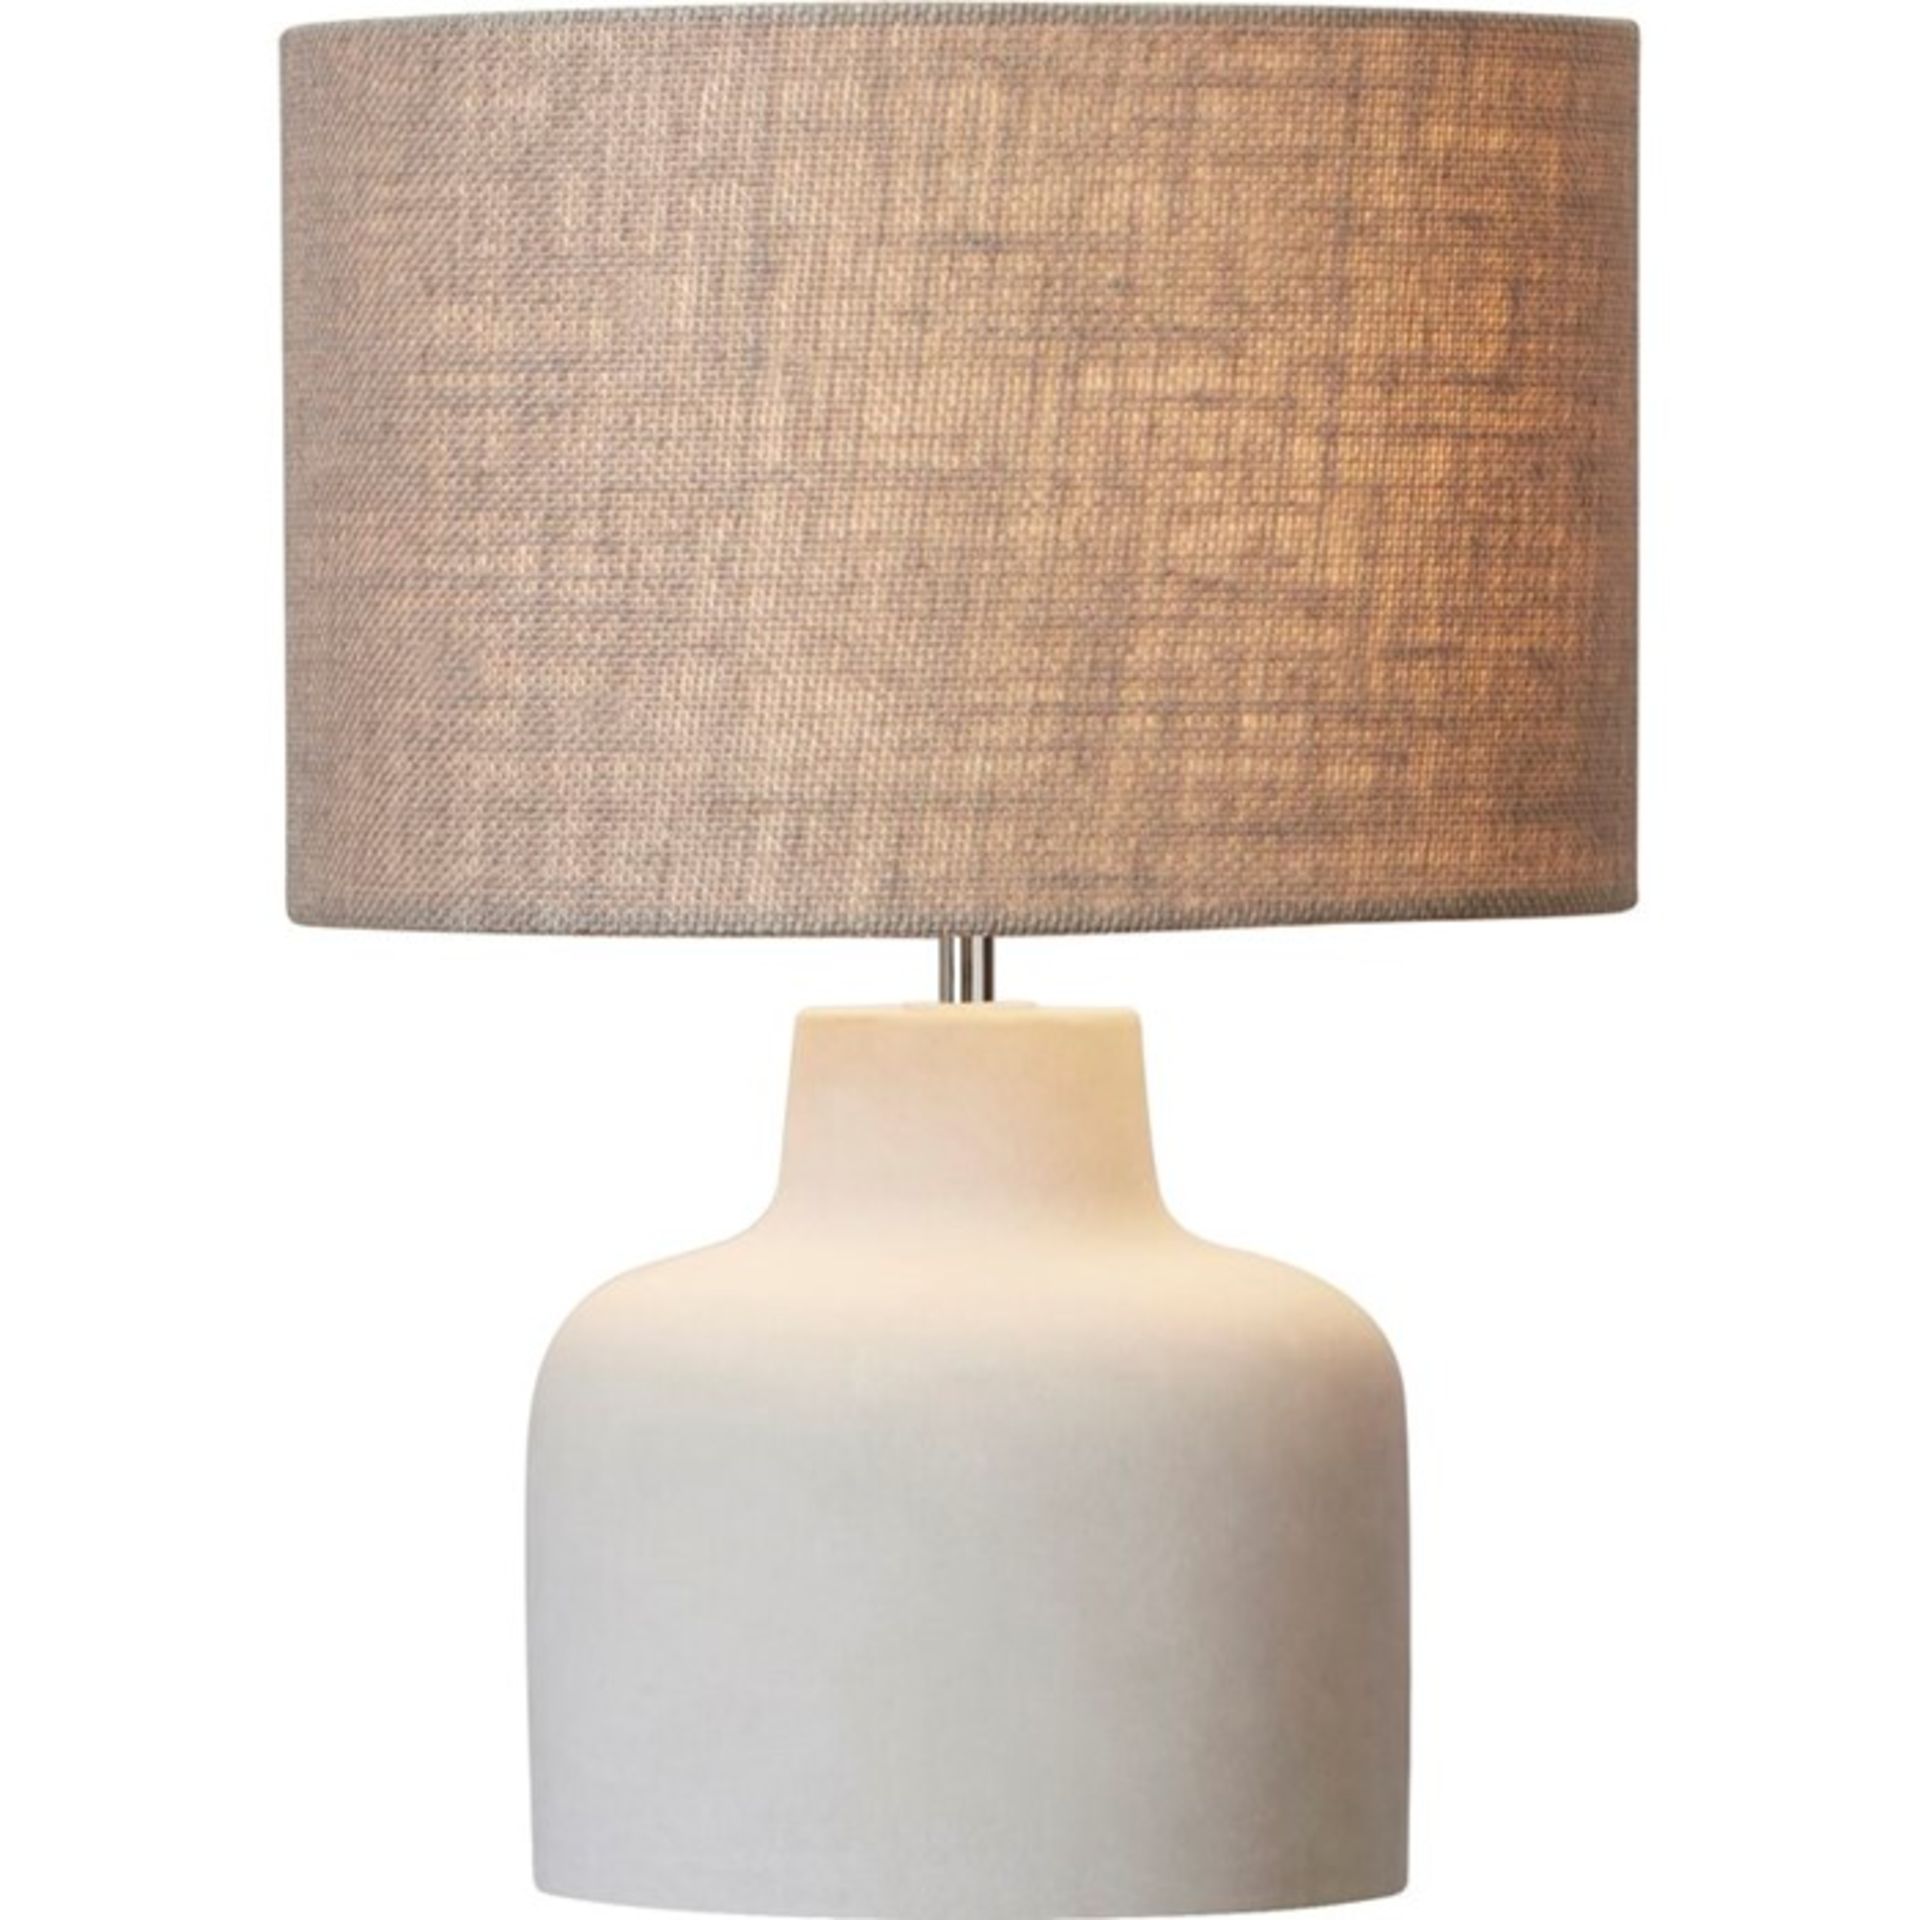 George Oliver, La Merced 43cm Table Lamp - RRP £79.99 (LAST1196 - 12120/4) 3E